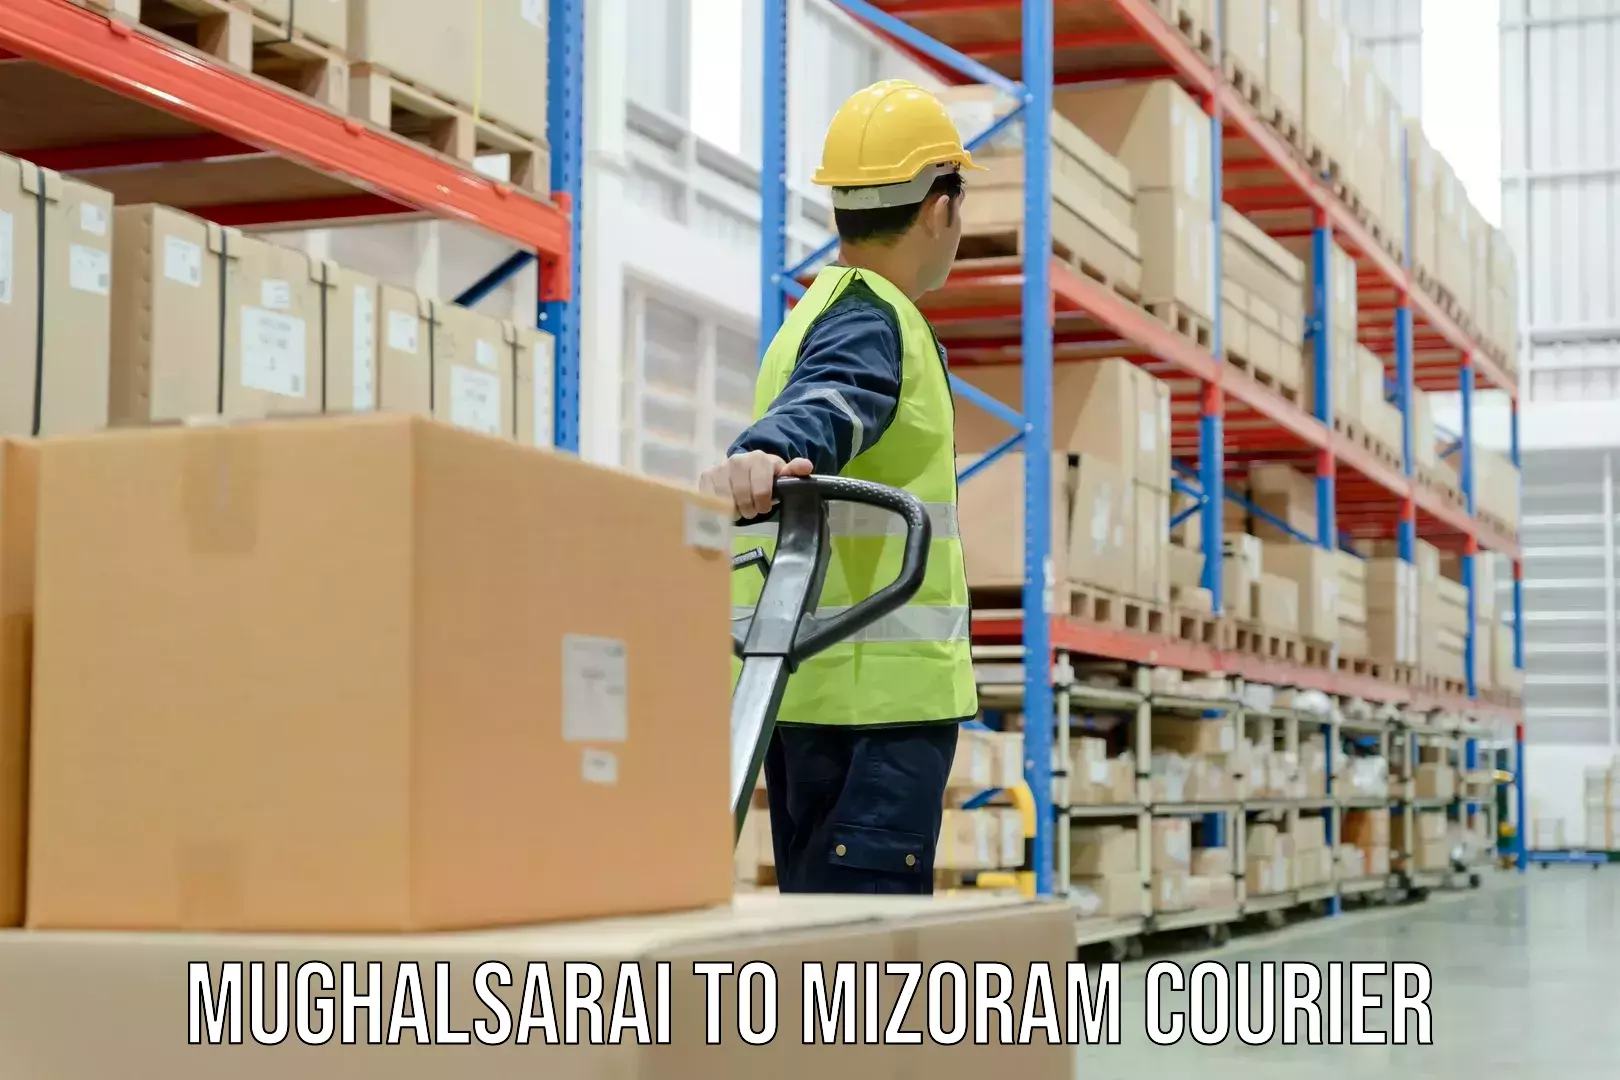 Courier service innovation Mughalsarai to Mizoram